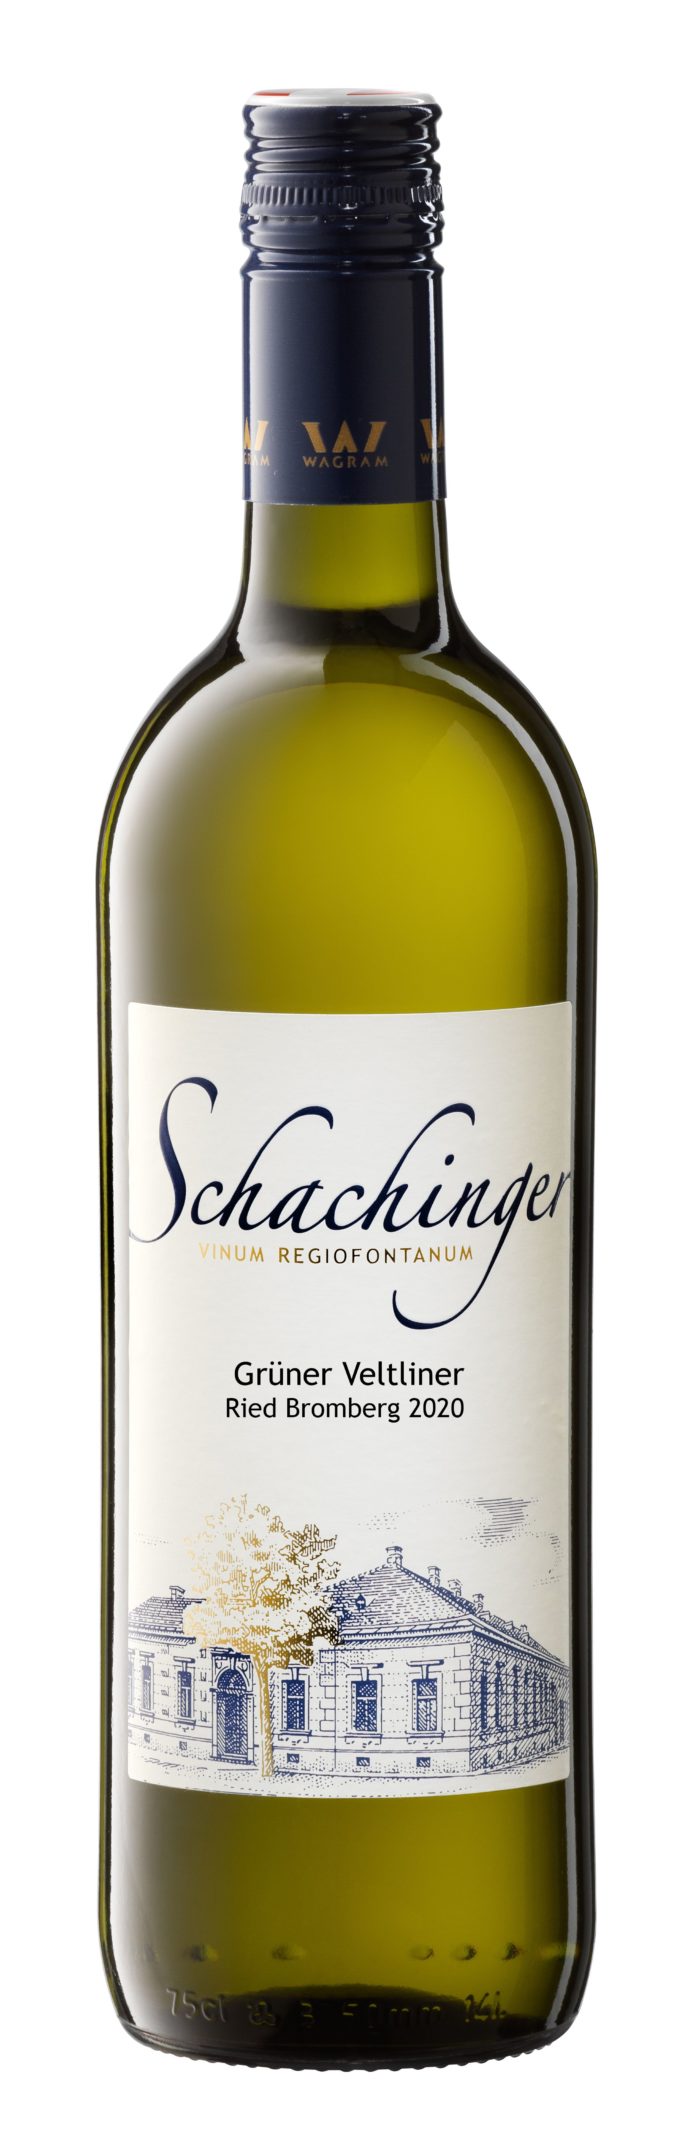 Grüner Veltliner Ried Bromberg 2020 Weingut Schachinger Königsbrunn am Wagram